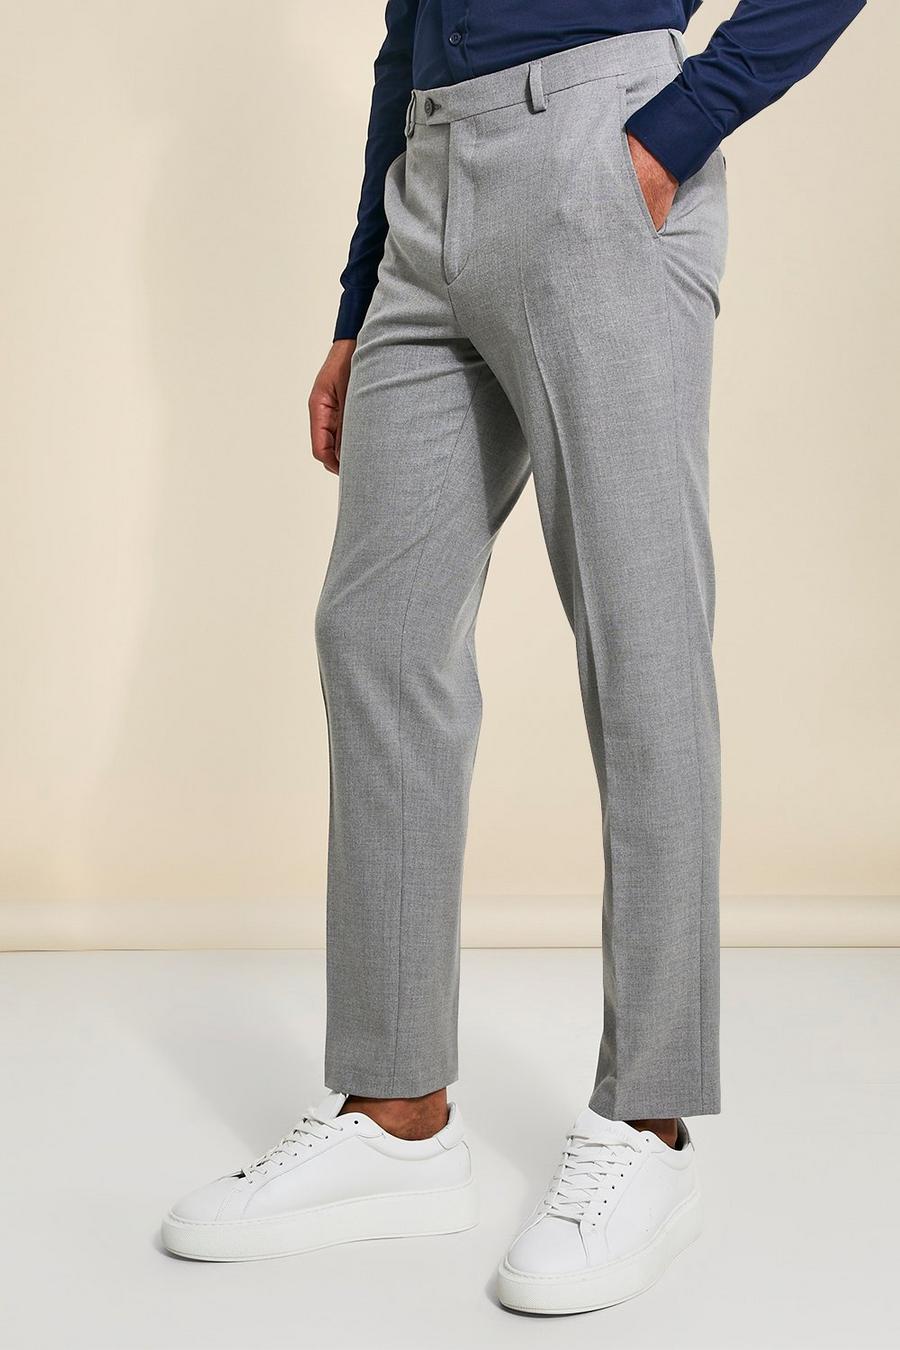 Pantaloni completo Slim Fit grigi, Grey grigio